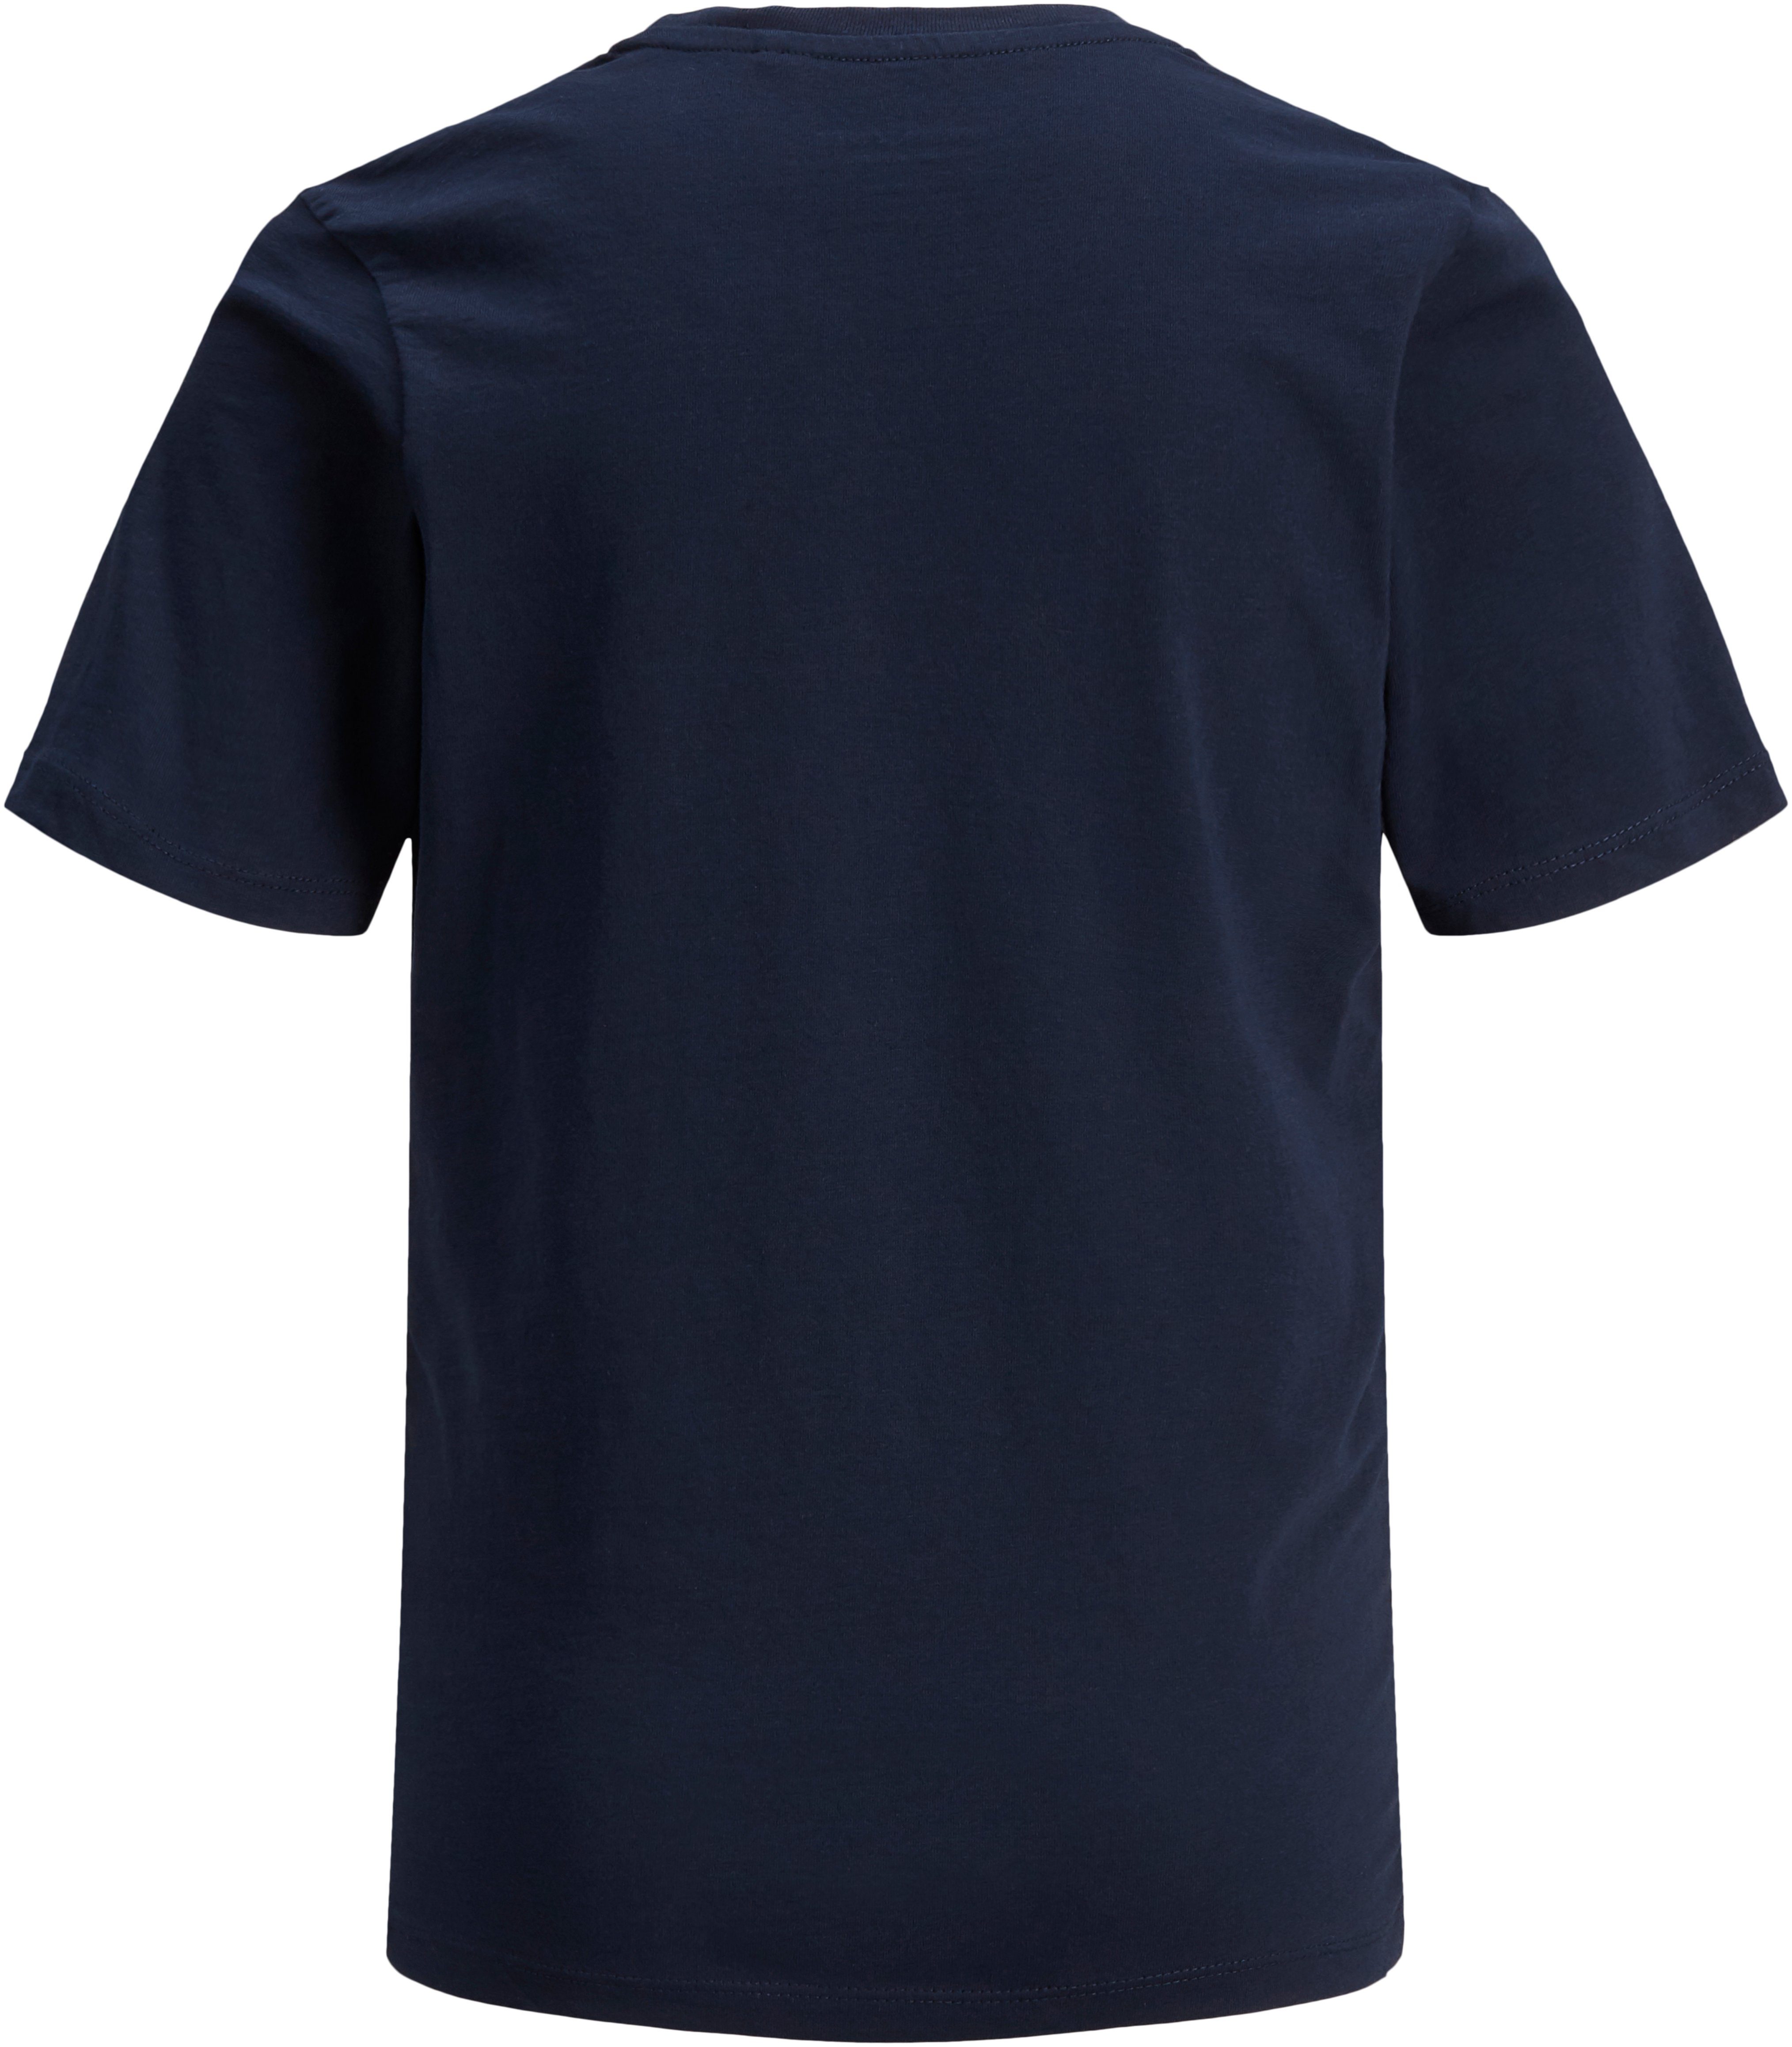 & navy blazer/Large Print T-Shirt Jones Jack Junior